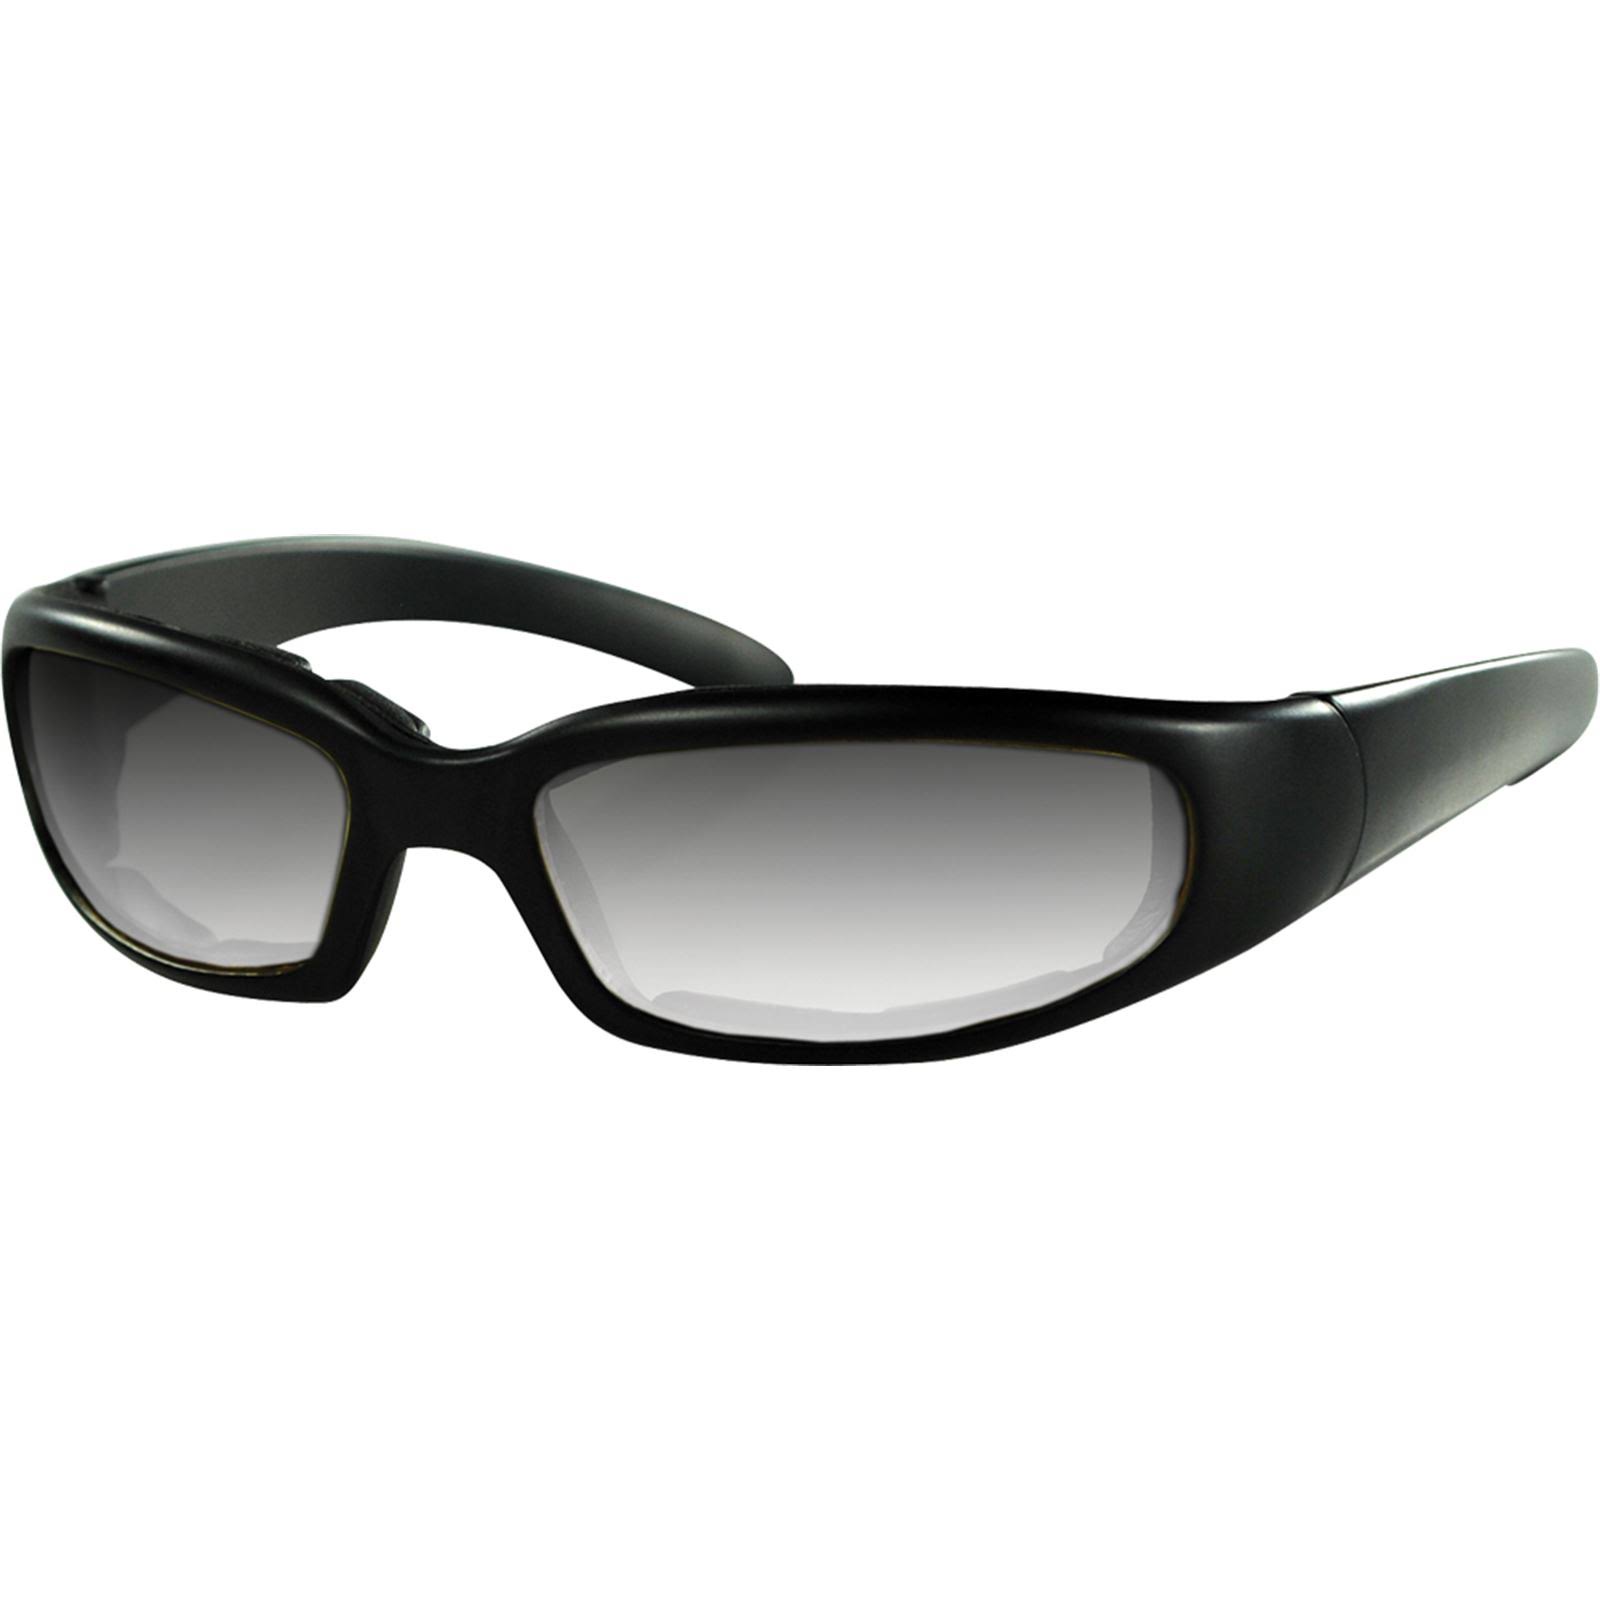 ZANheadgear New York Sunglasses